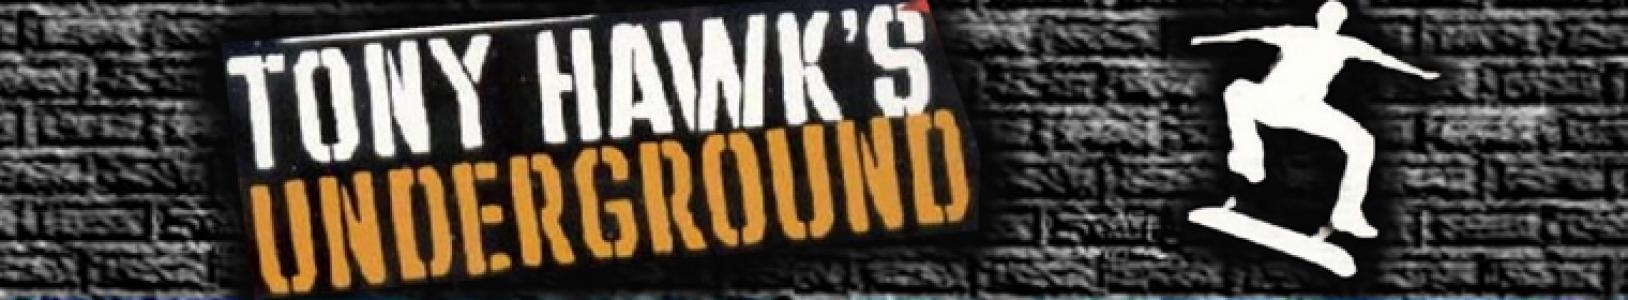 Tony Hawk's Underground banner